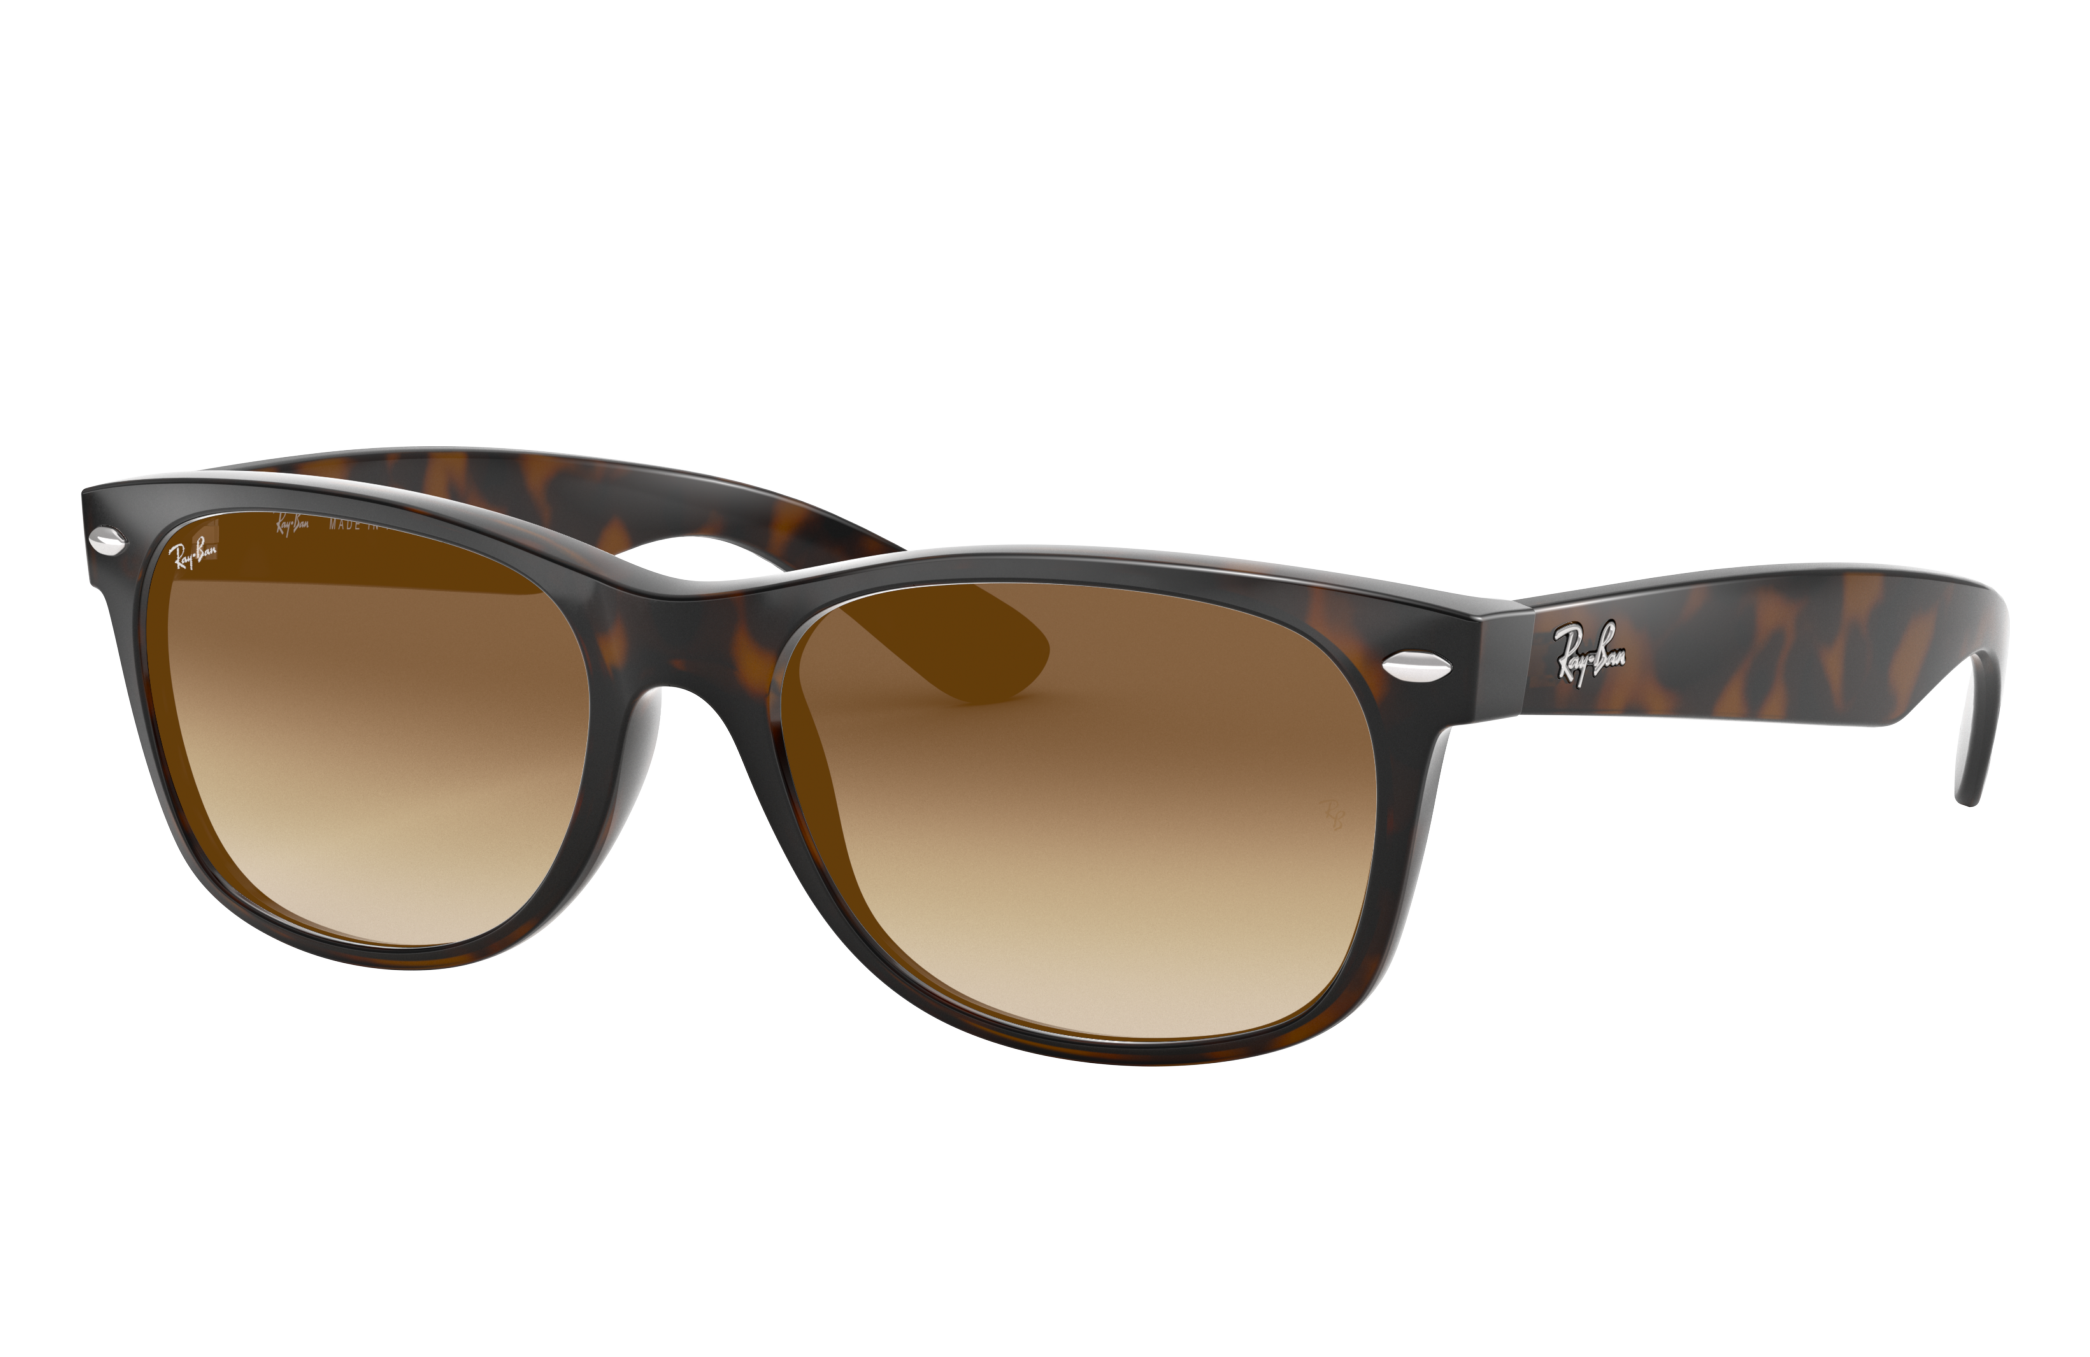 New Wayfarer Classic Sunglasses in Light Havana and Light Brown | Ray-Ban®